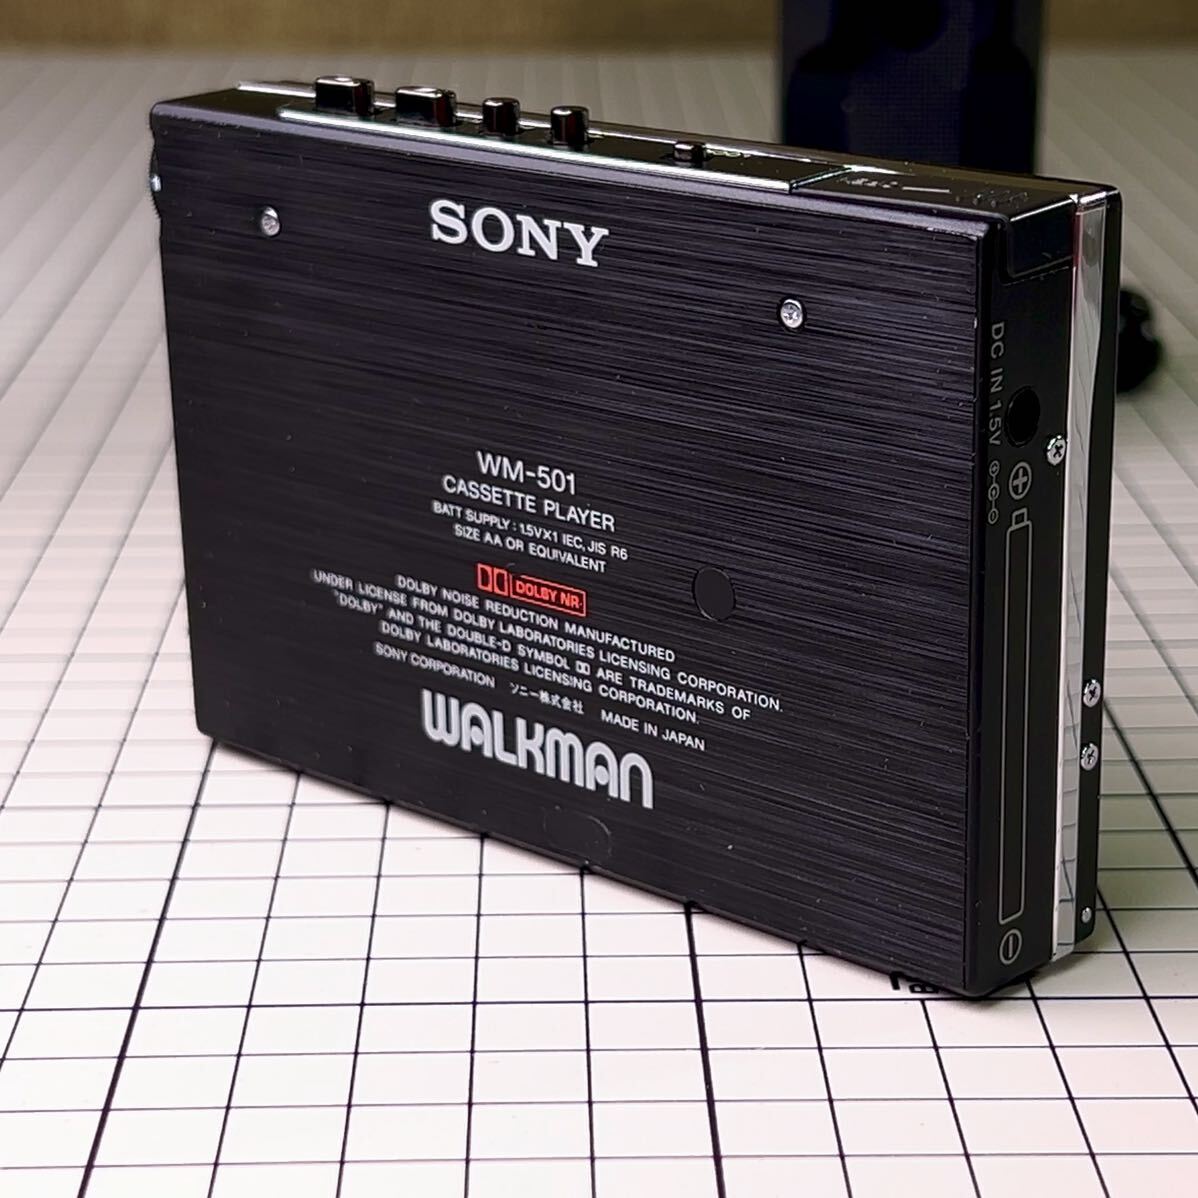  service completed finest quality goods WM-501 WALKMAN SONY Walkman Sony cassette Walkman 